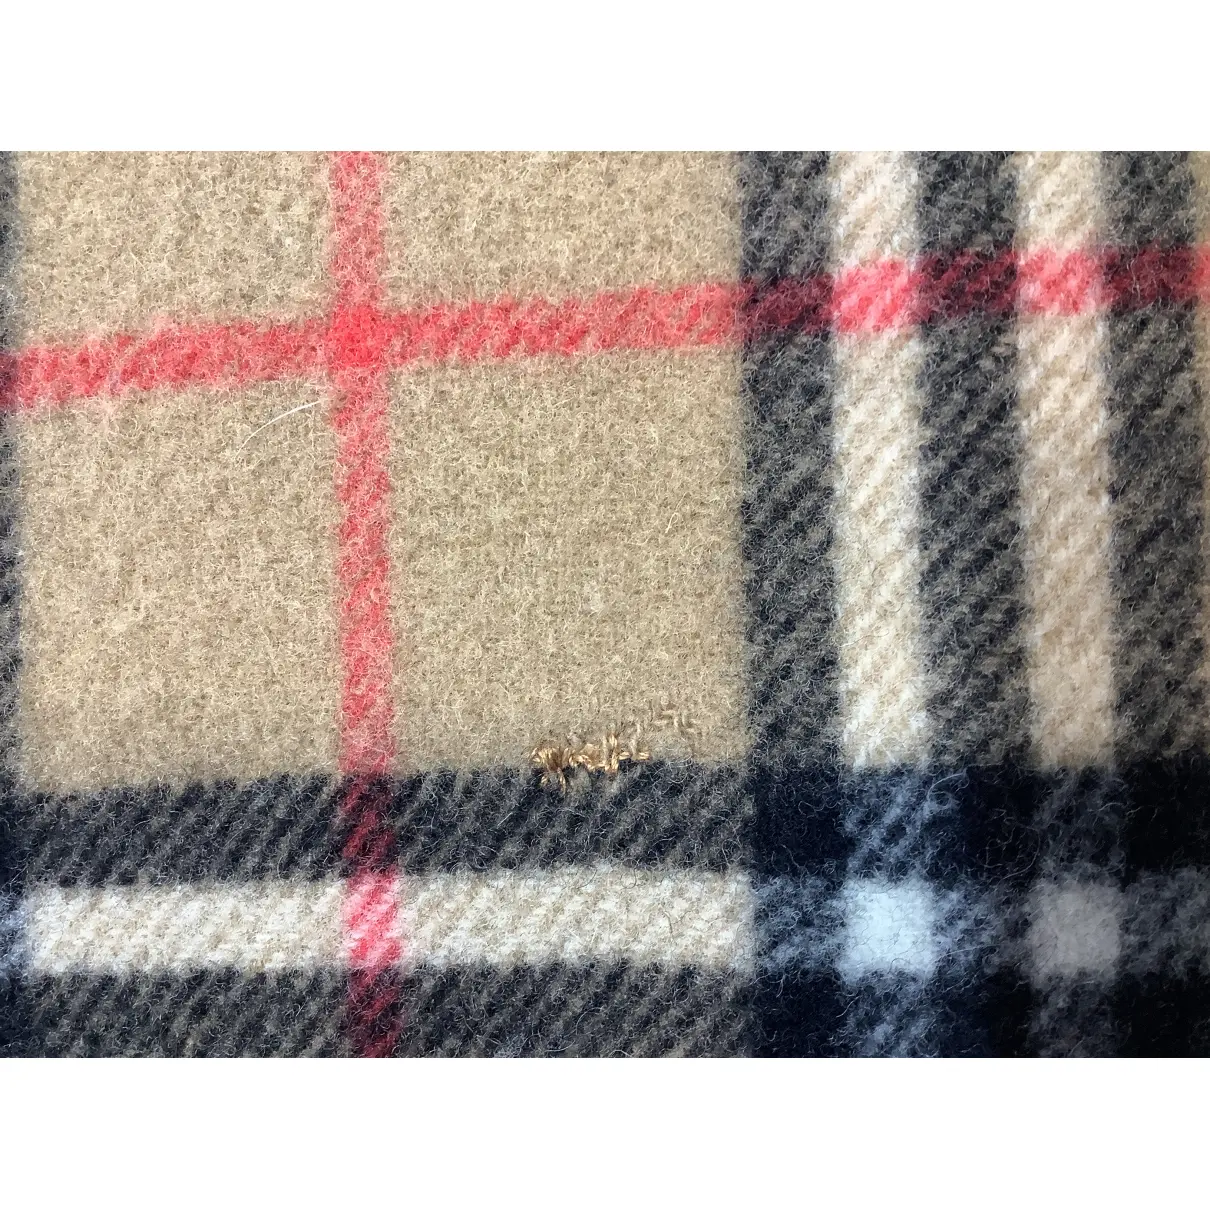 Wool scarf & pocket square Burberry - Vintage